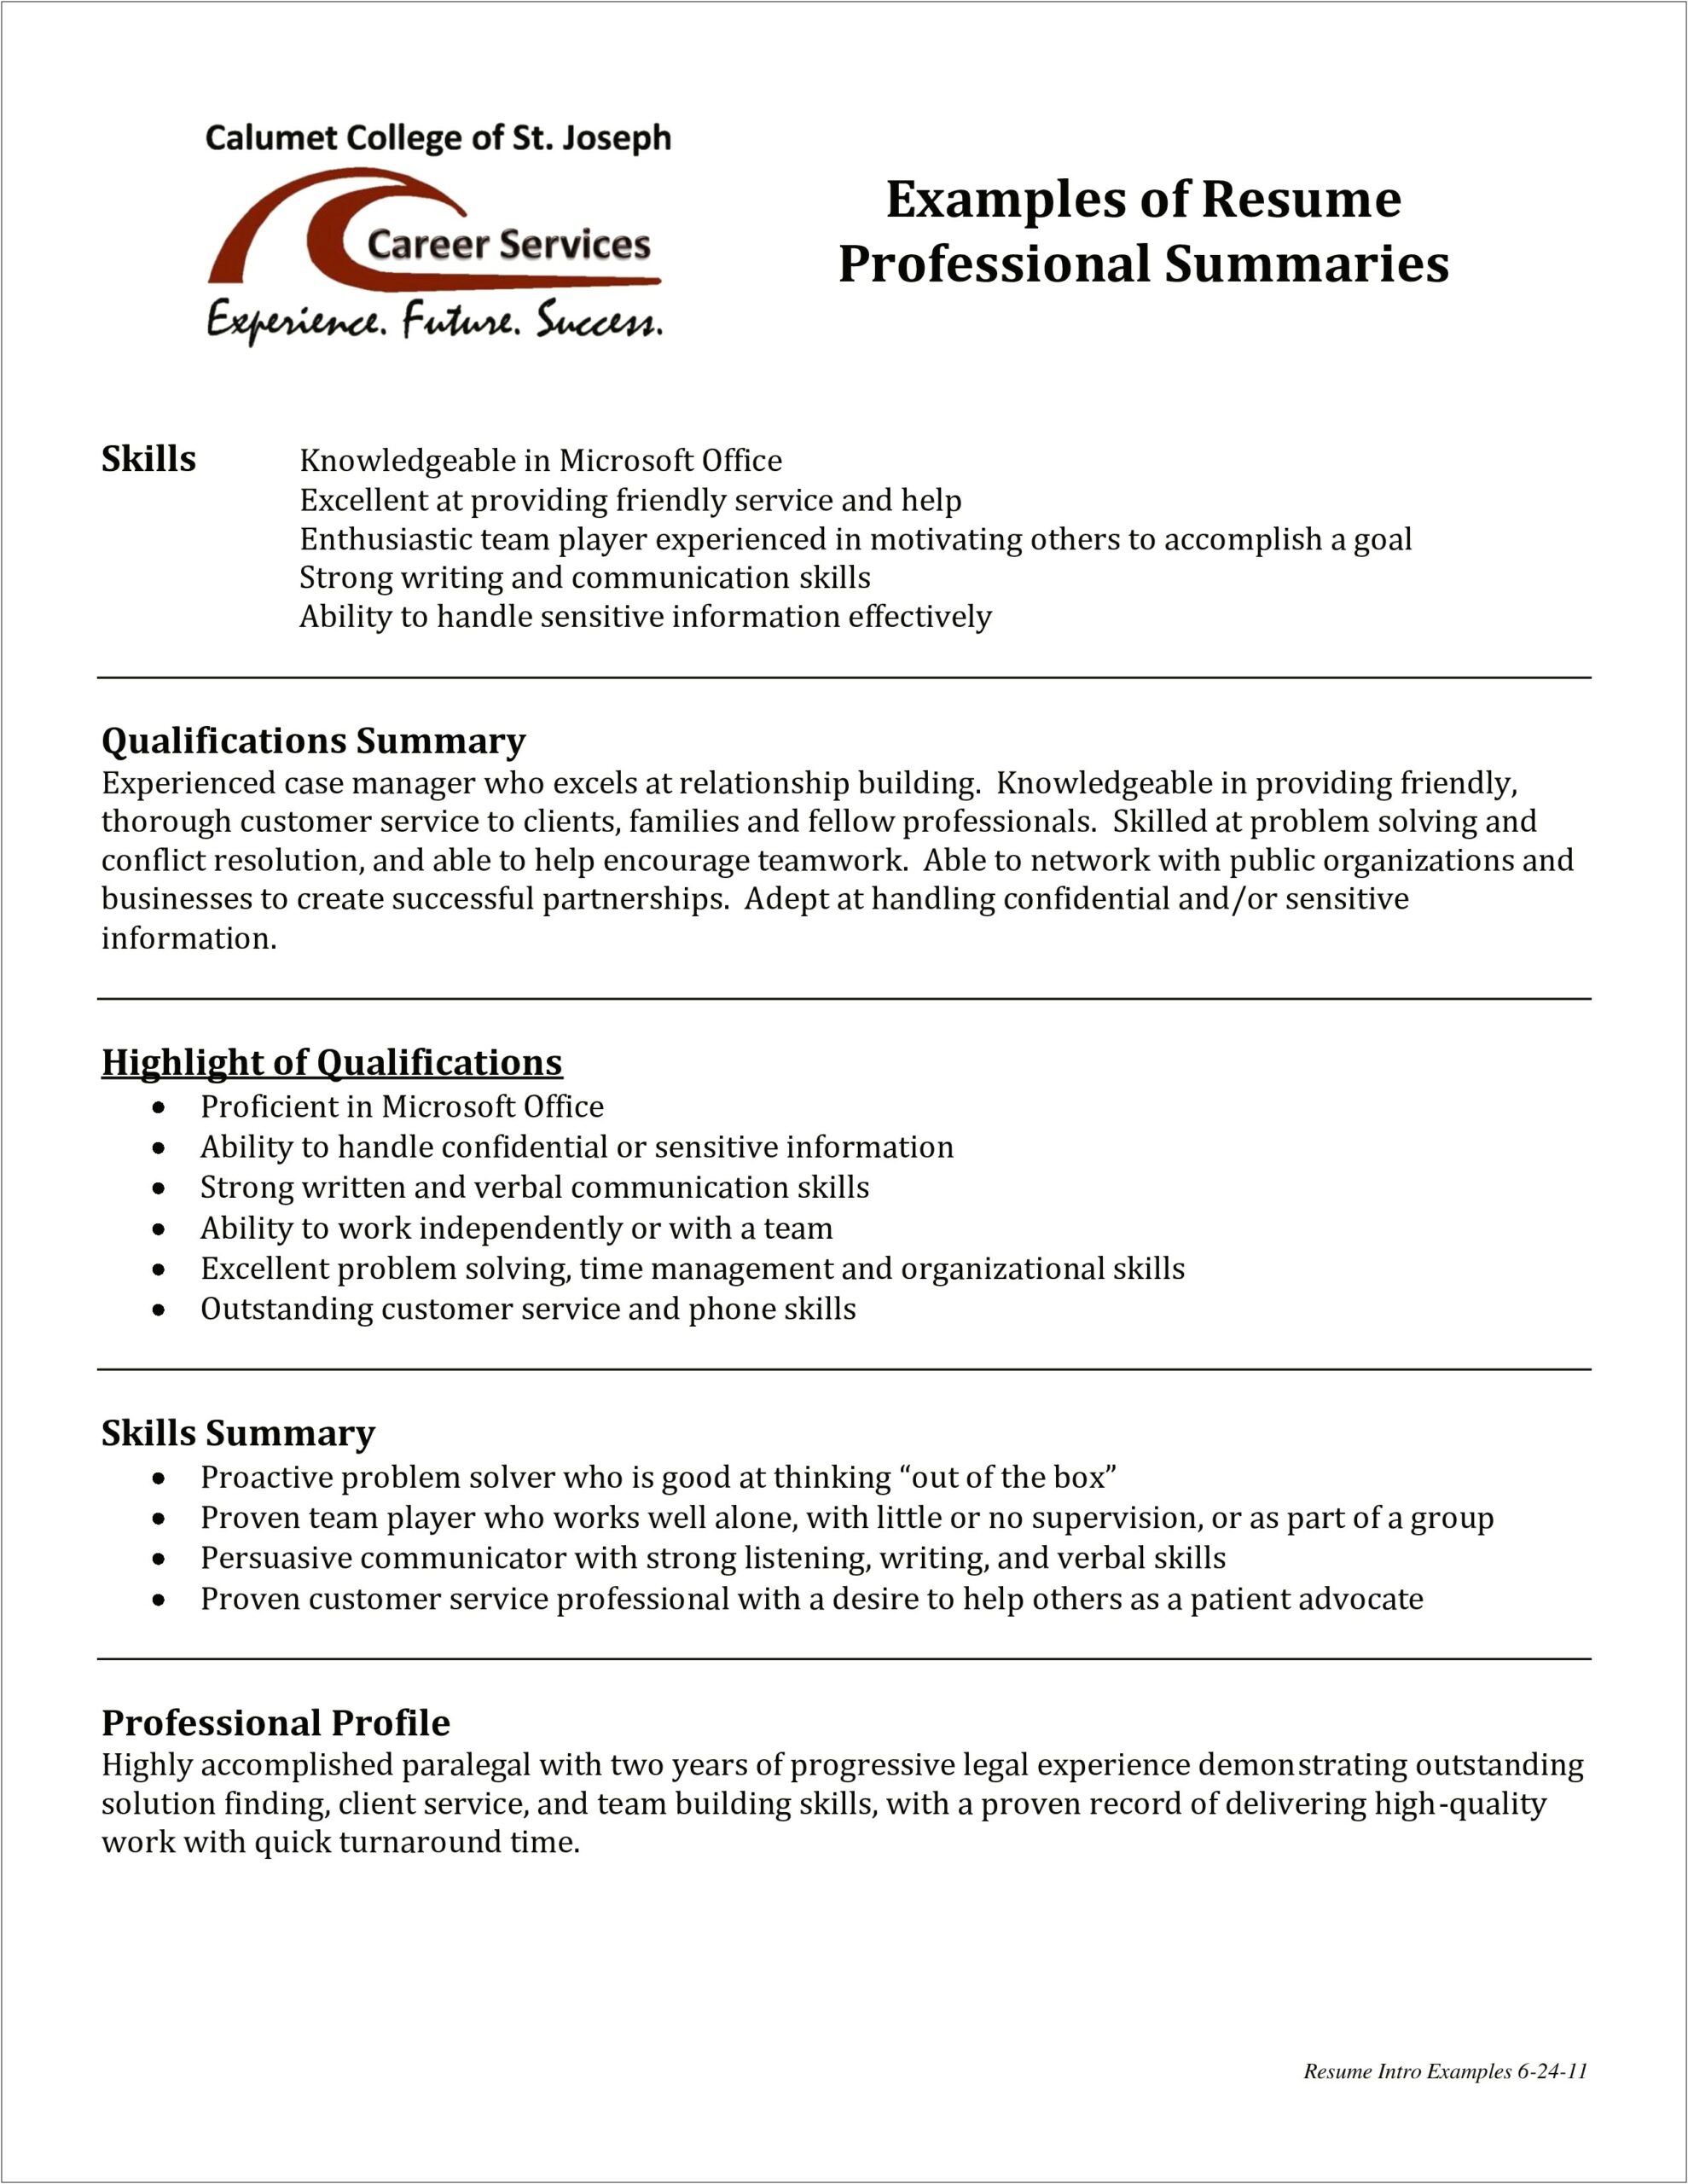 Writing A Professional Summary On Resume